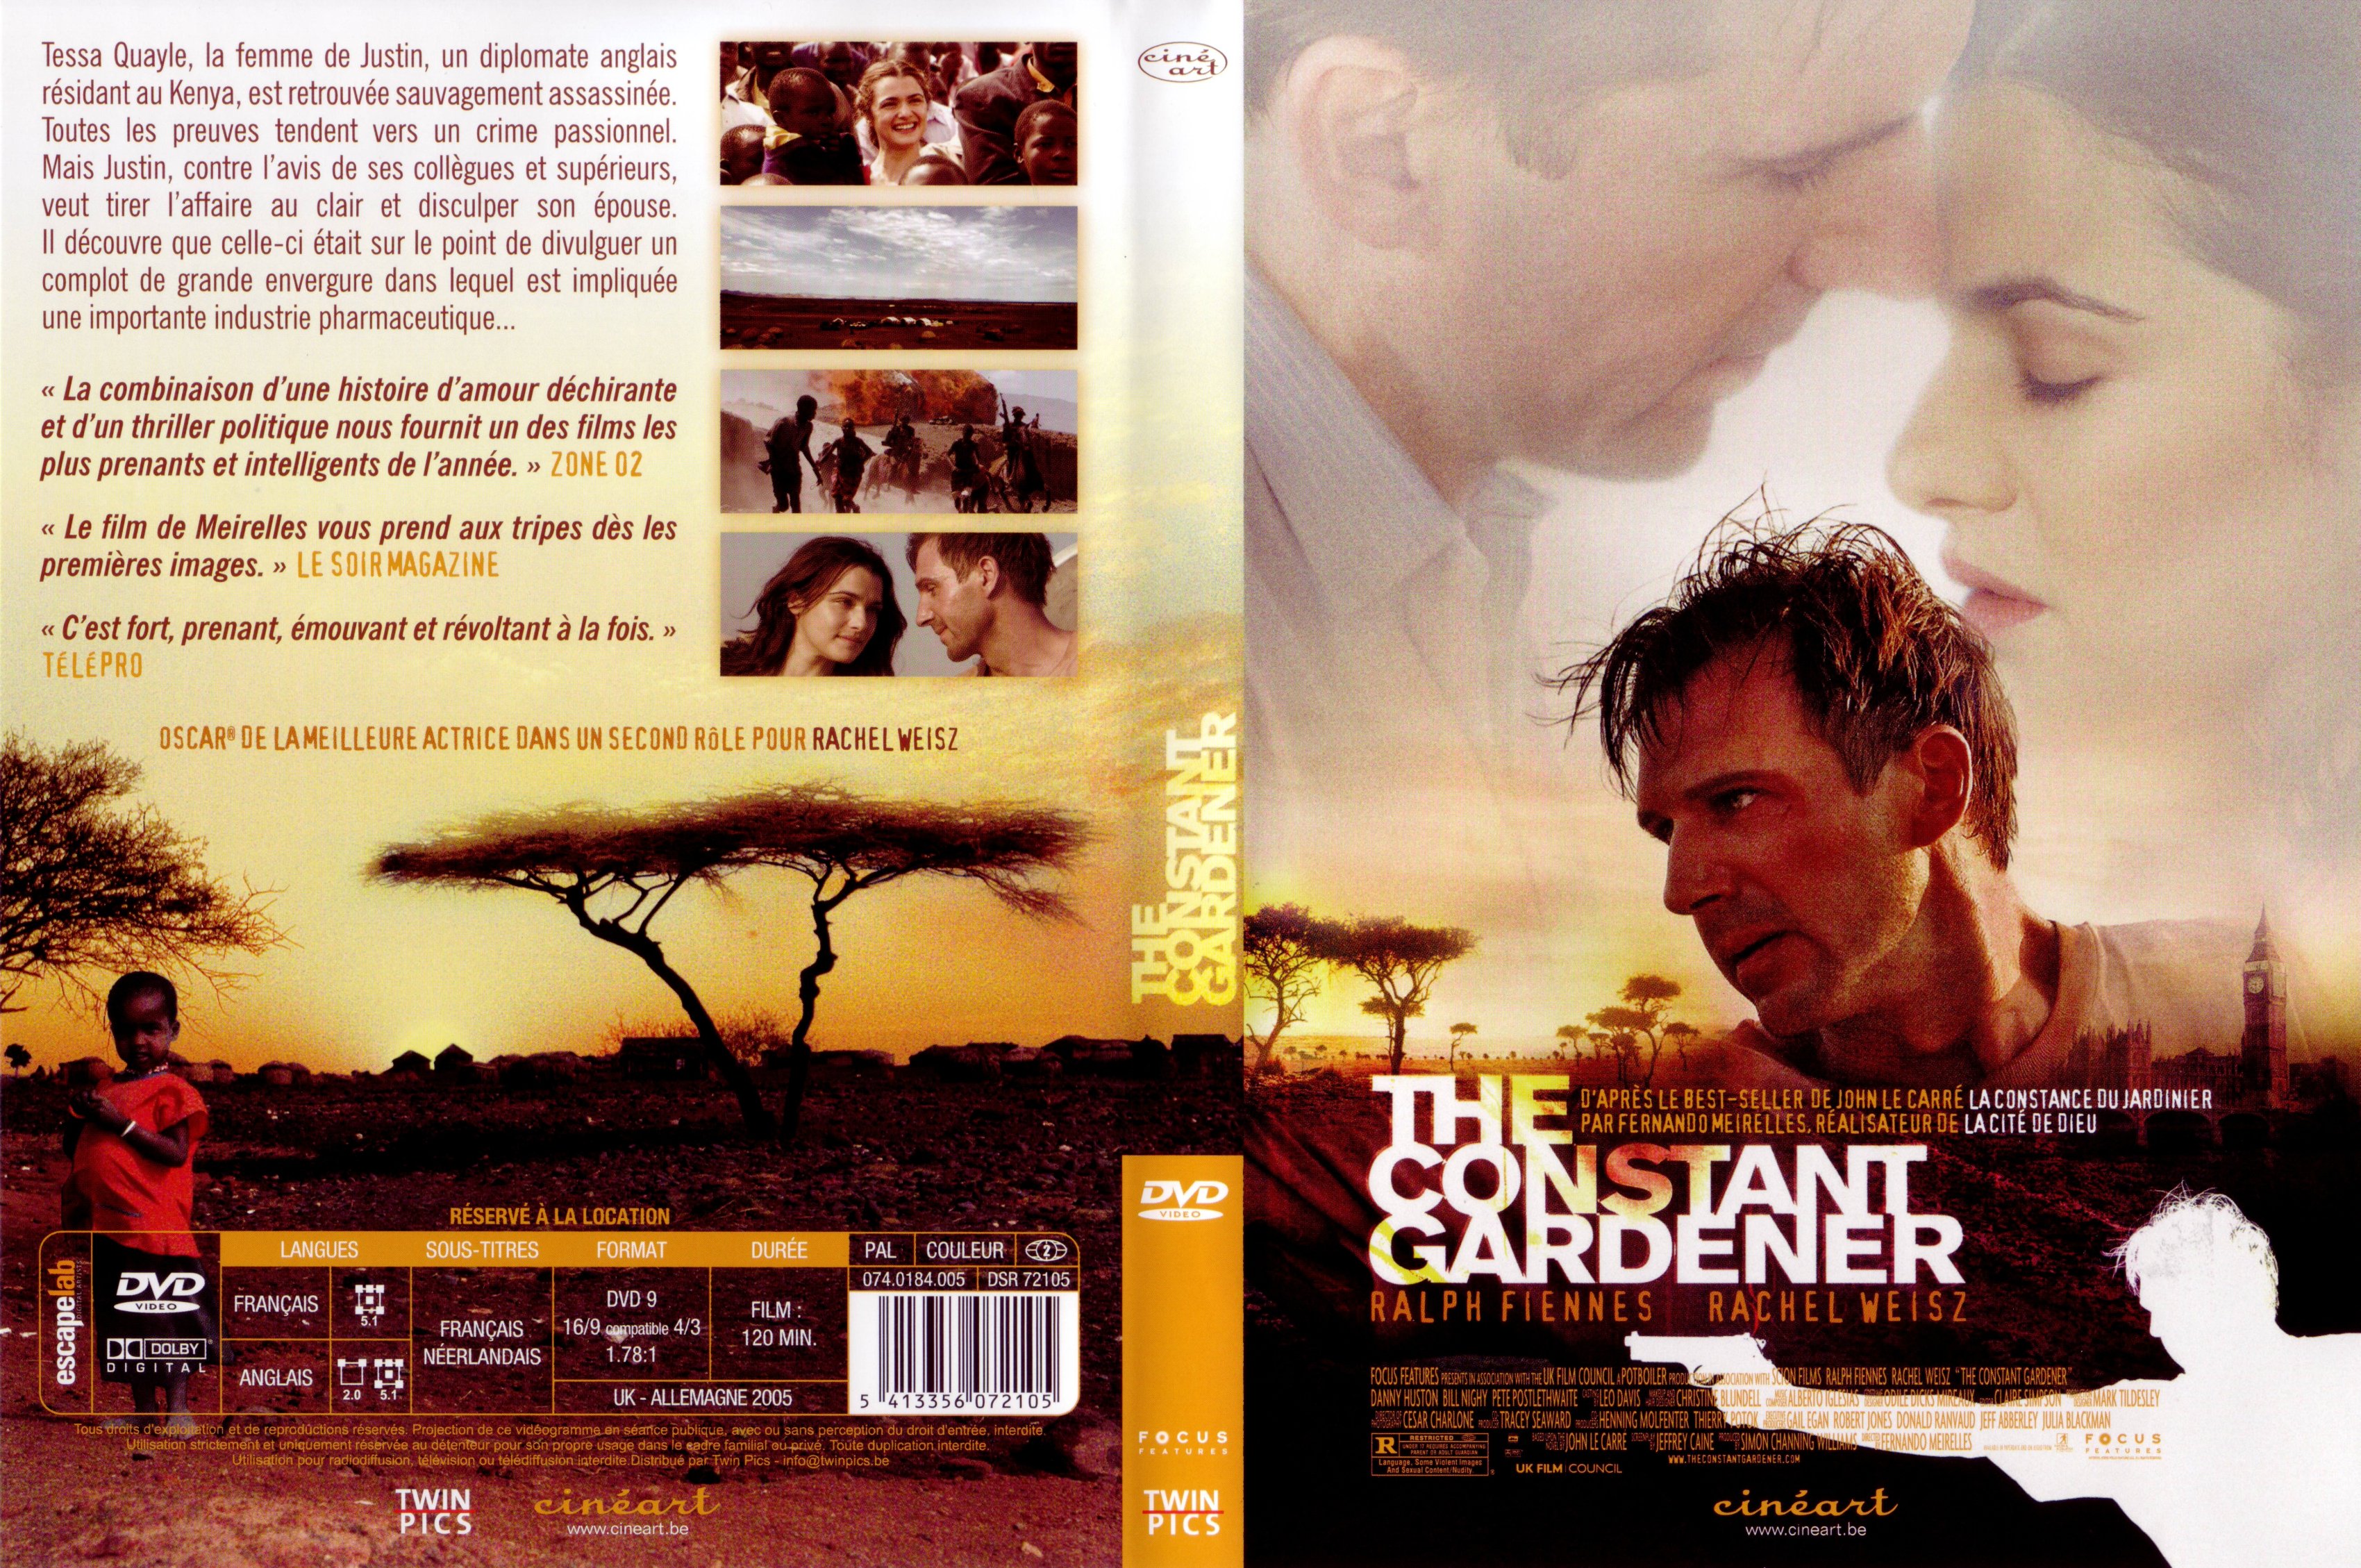 Jaquette DVD The constant gardener v2